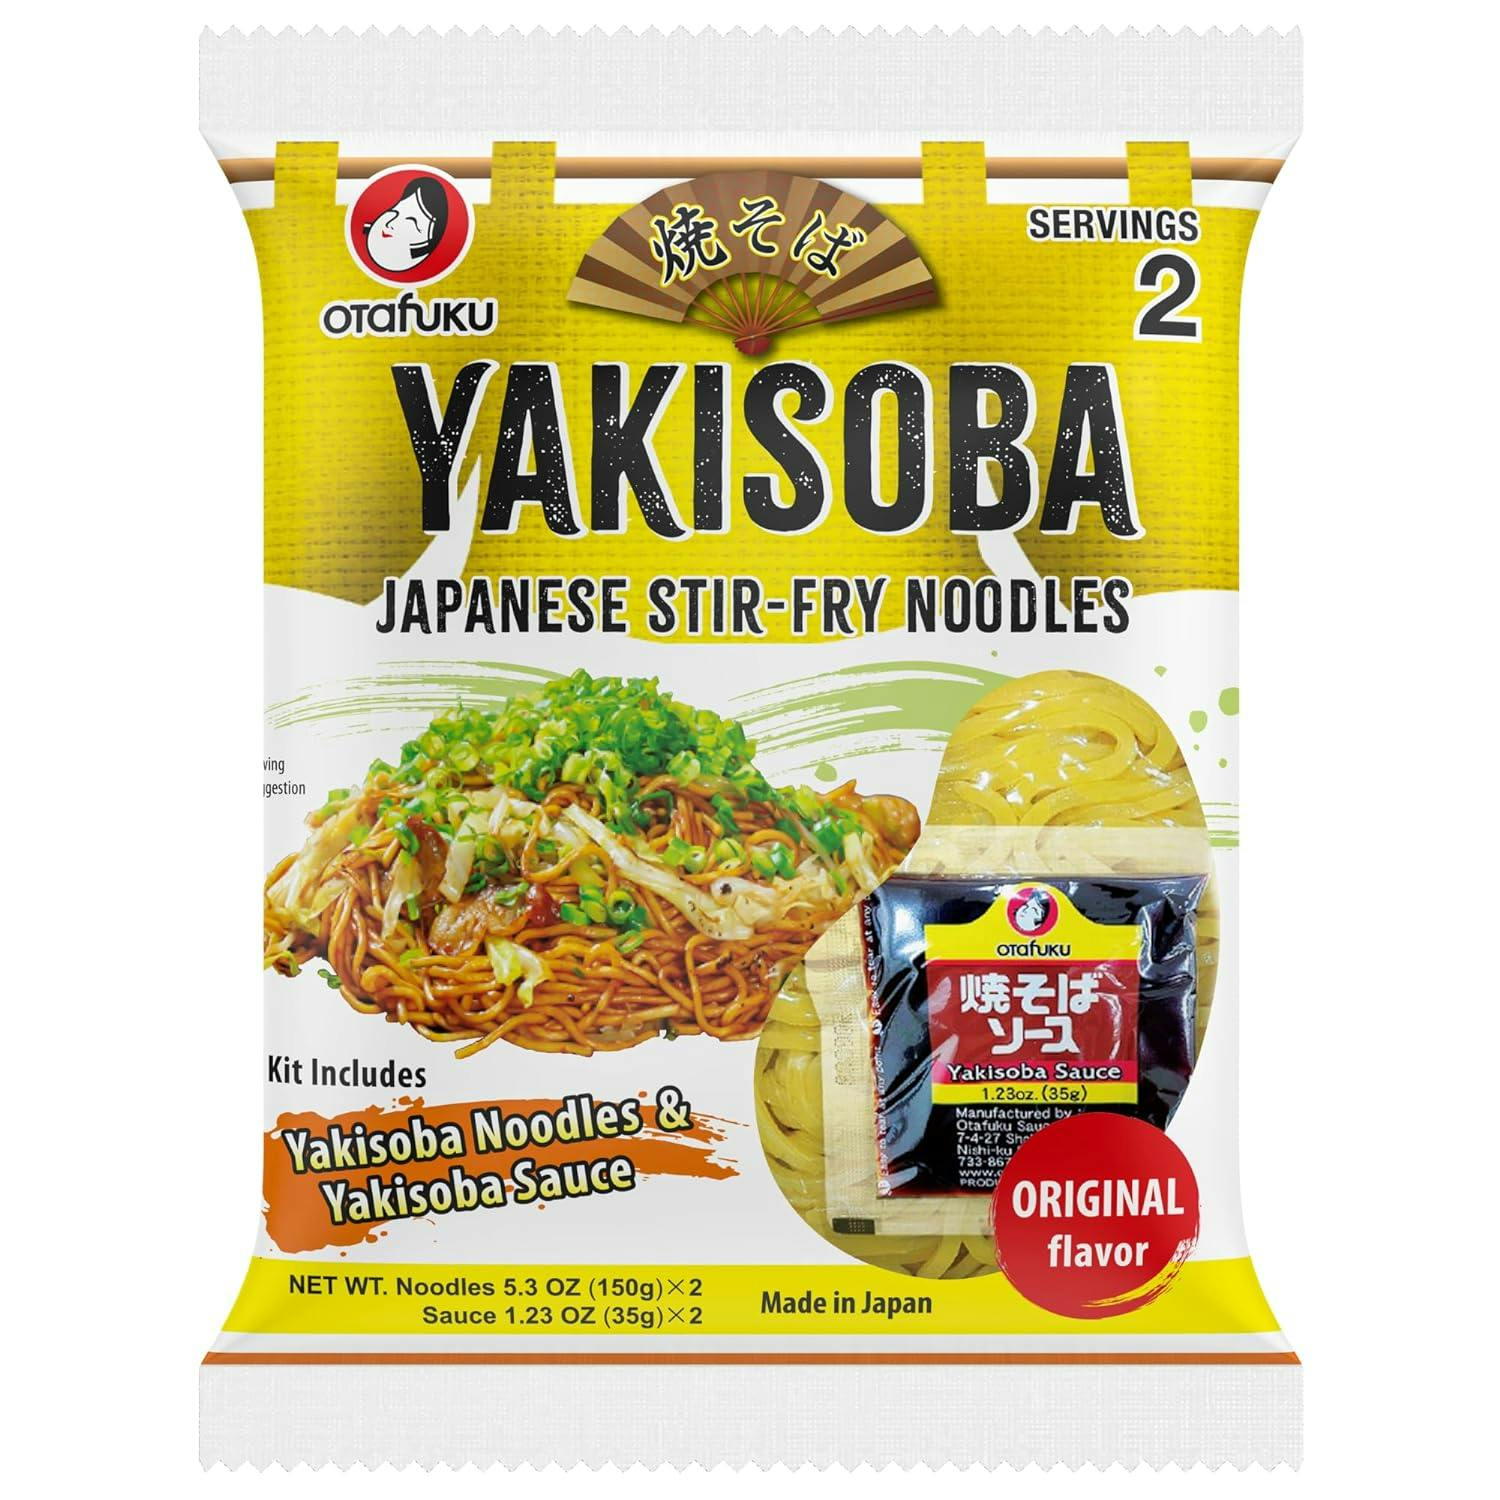 Otafuku Yakisoba Noodles with Original Sauce 2 servings 日式炒面 两份一包